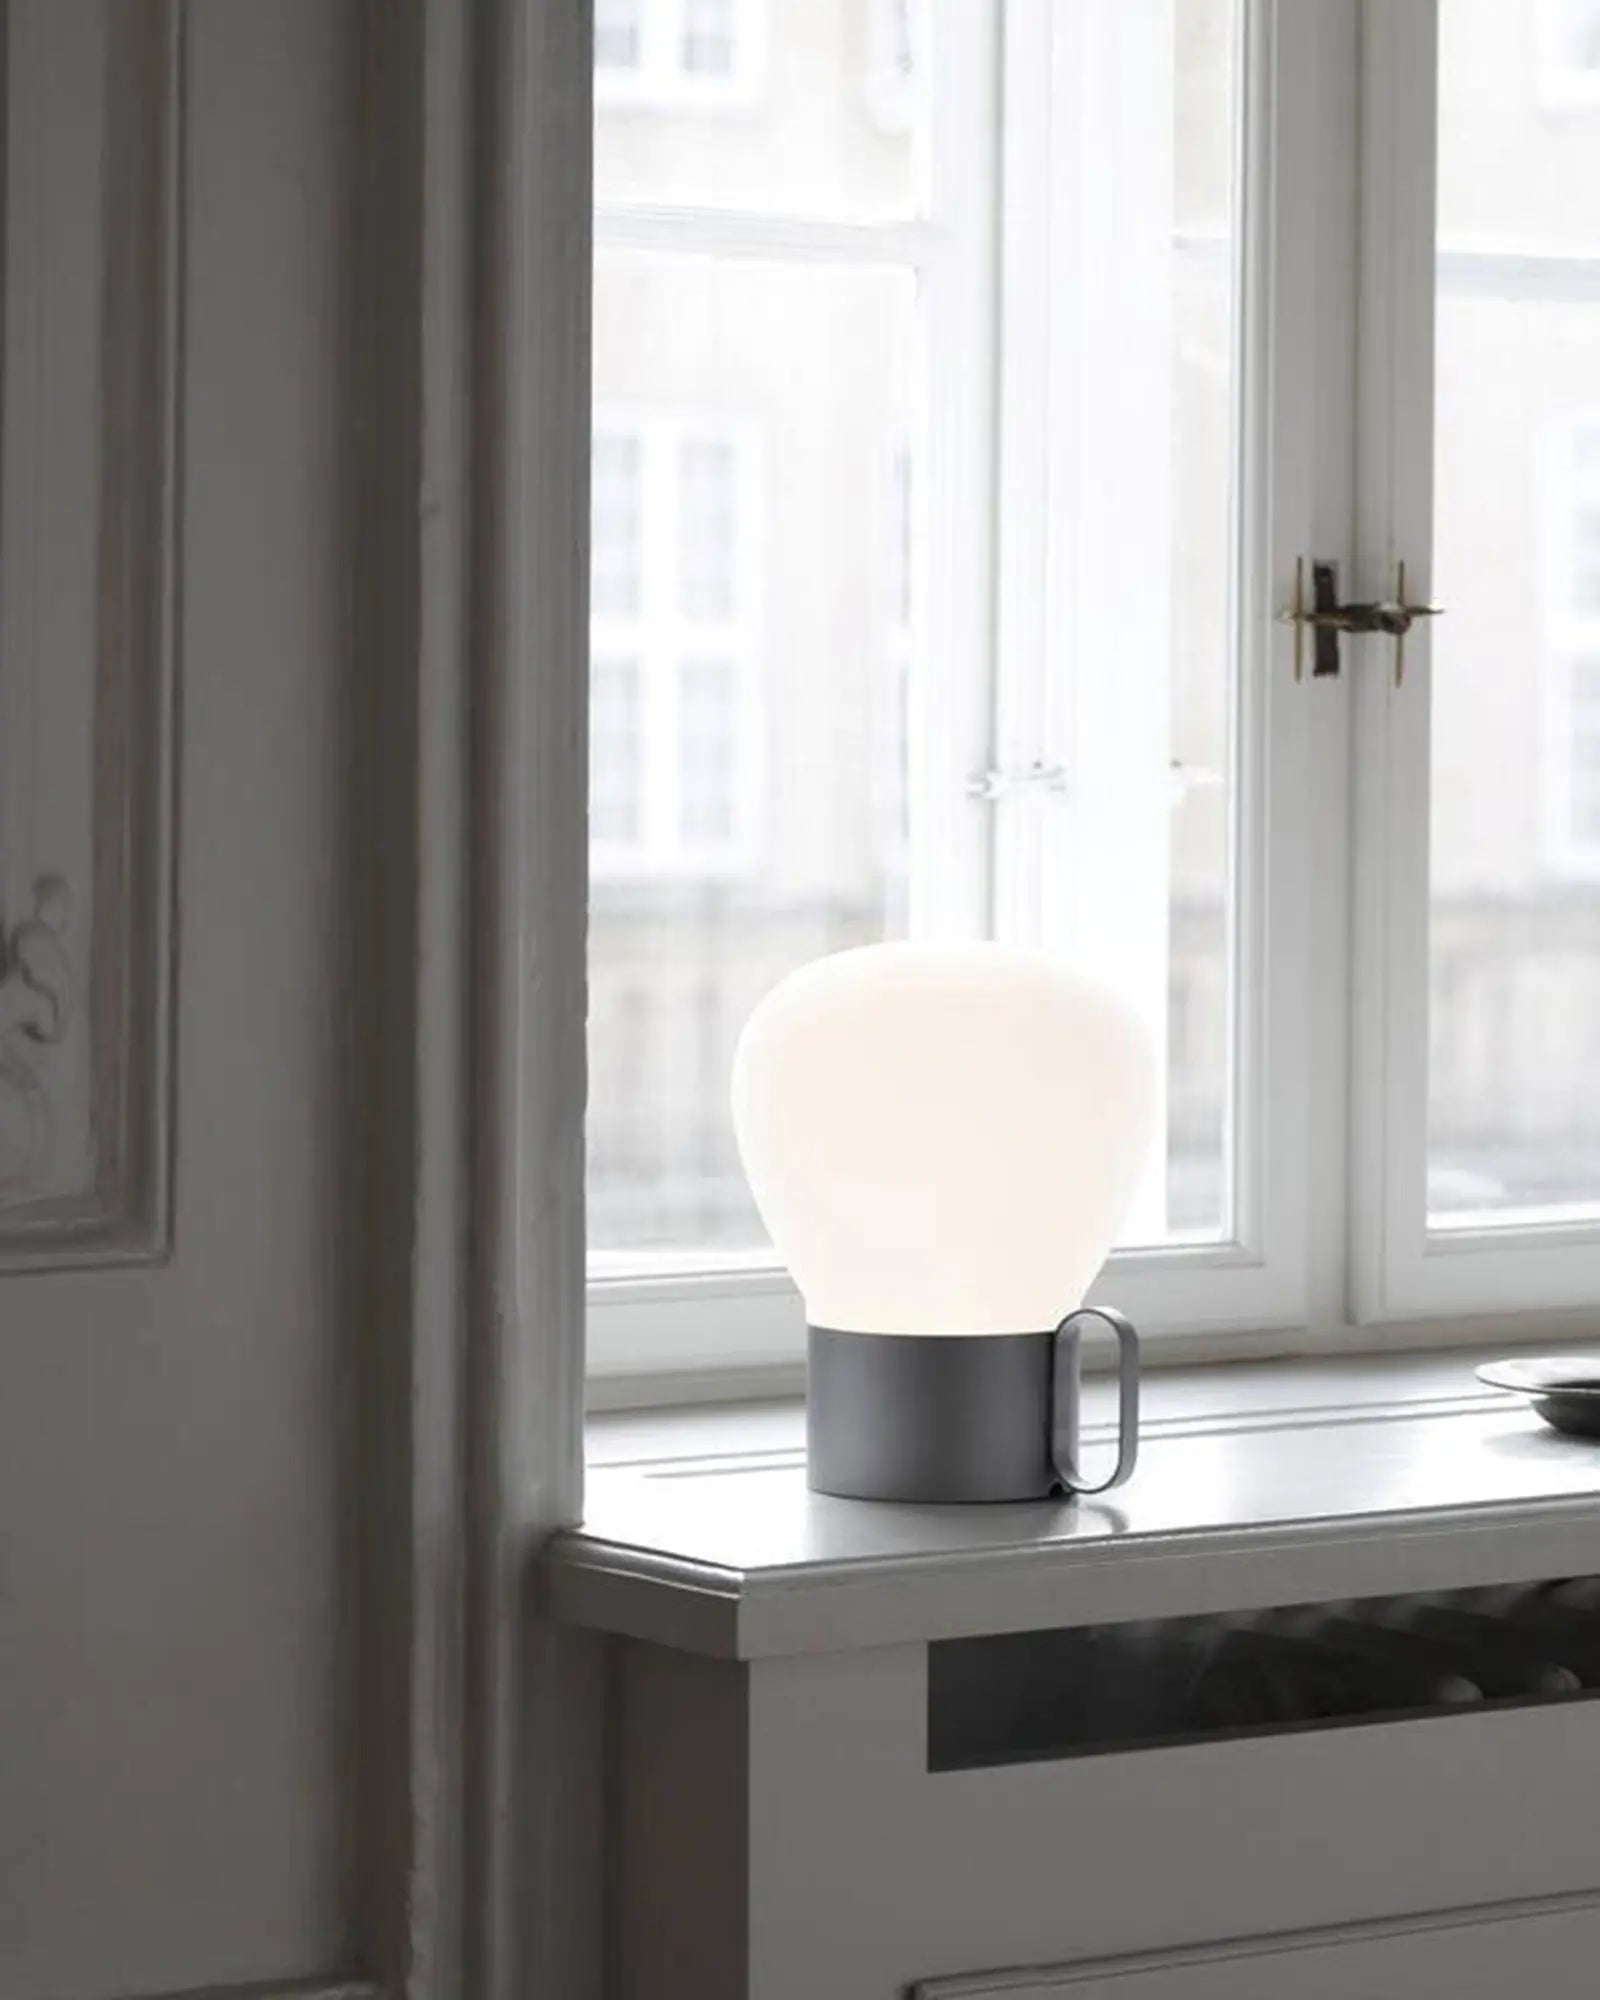 Nuru modern rechargeable Scandinavian table lamp grey on window frame